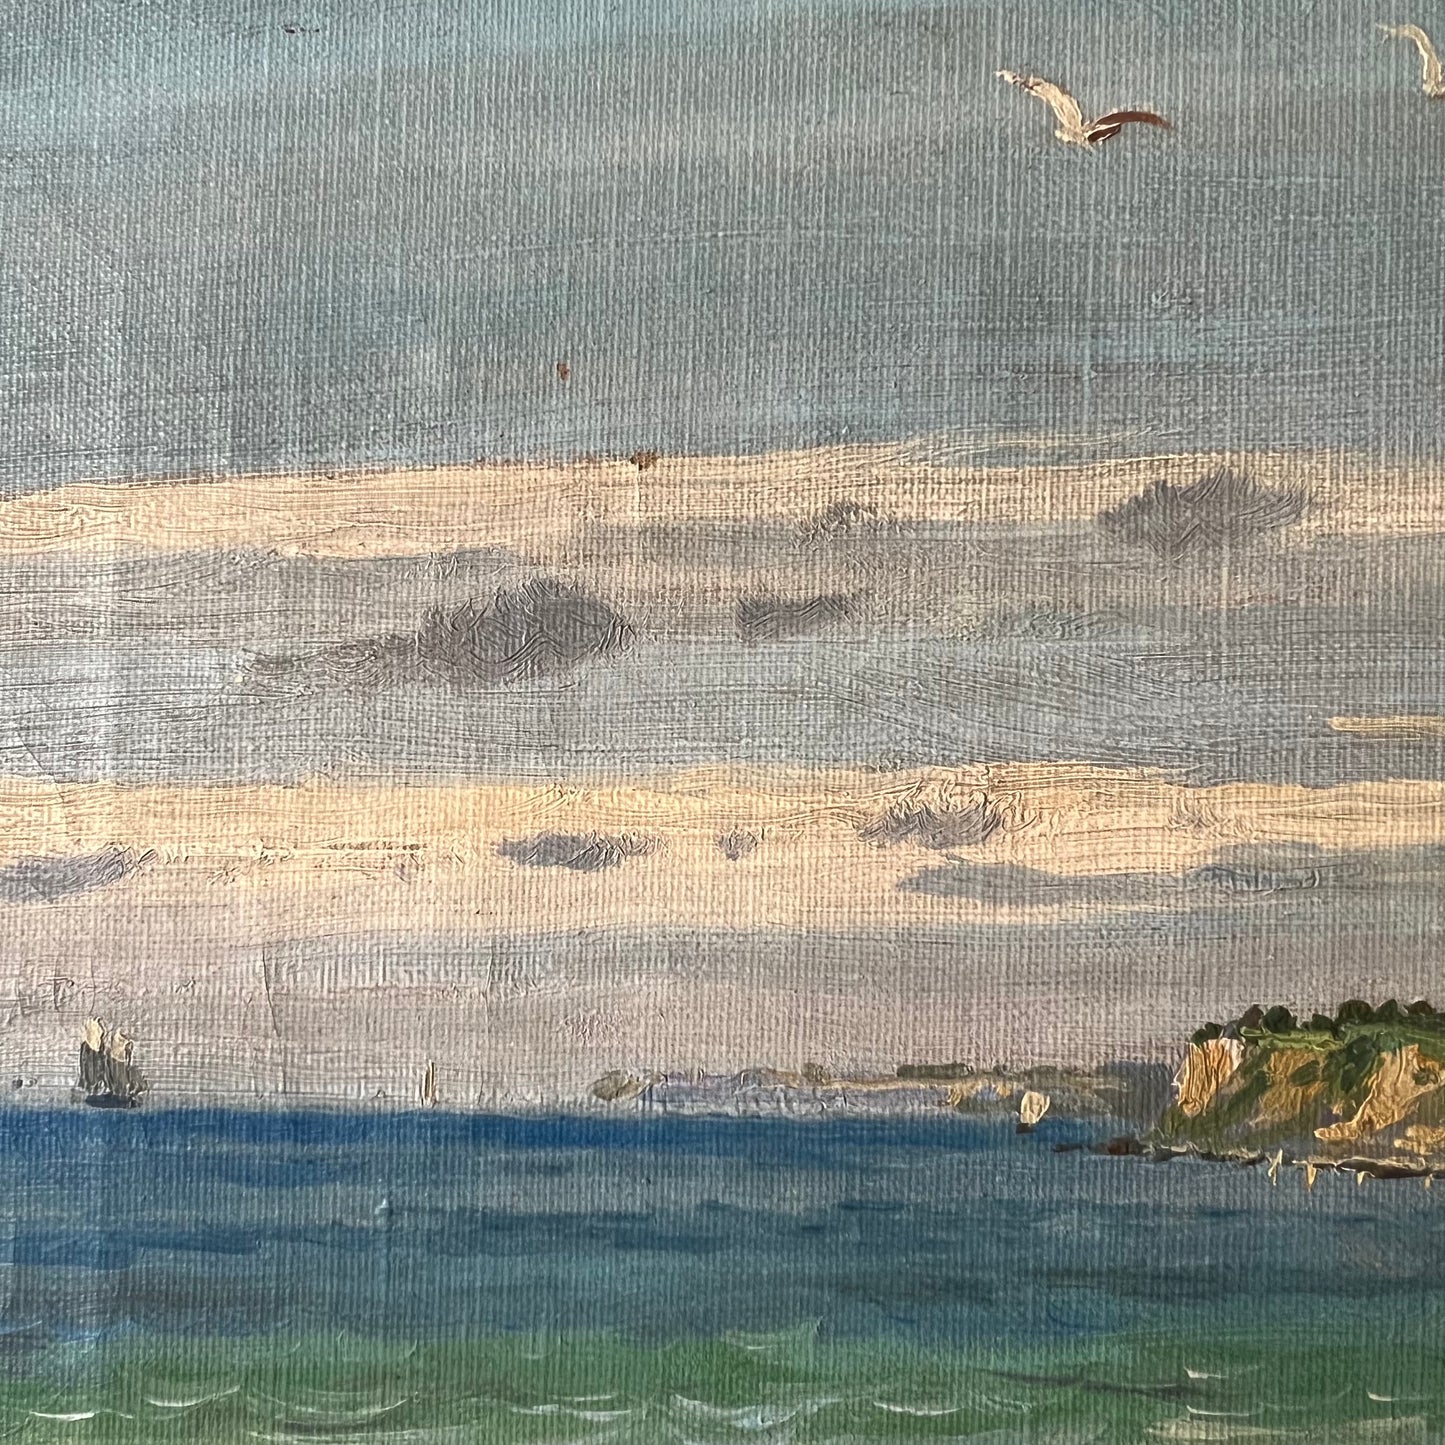 Vintage Danish Oil Painting By the Seaside